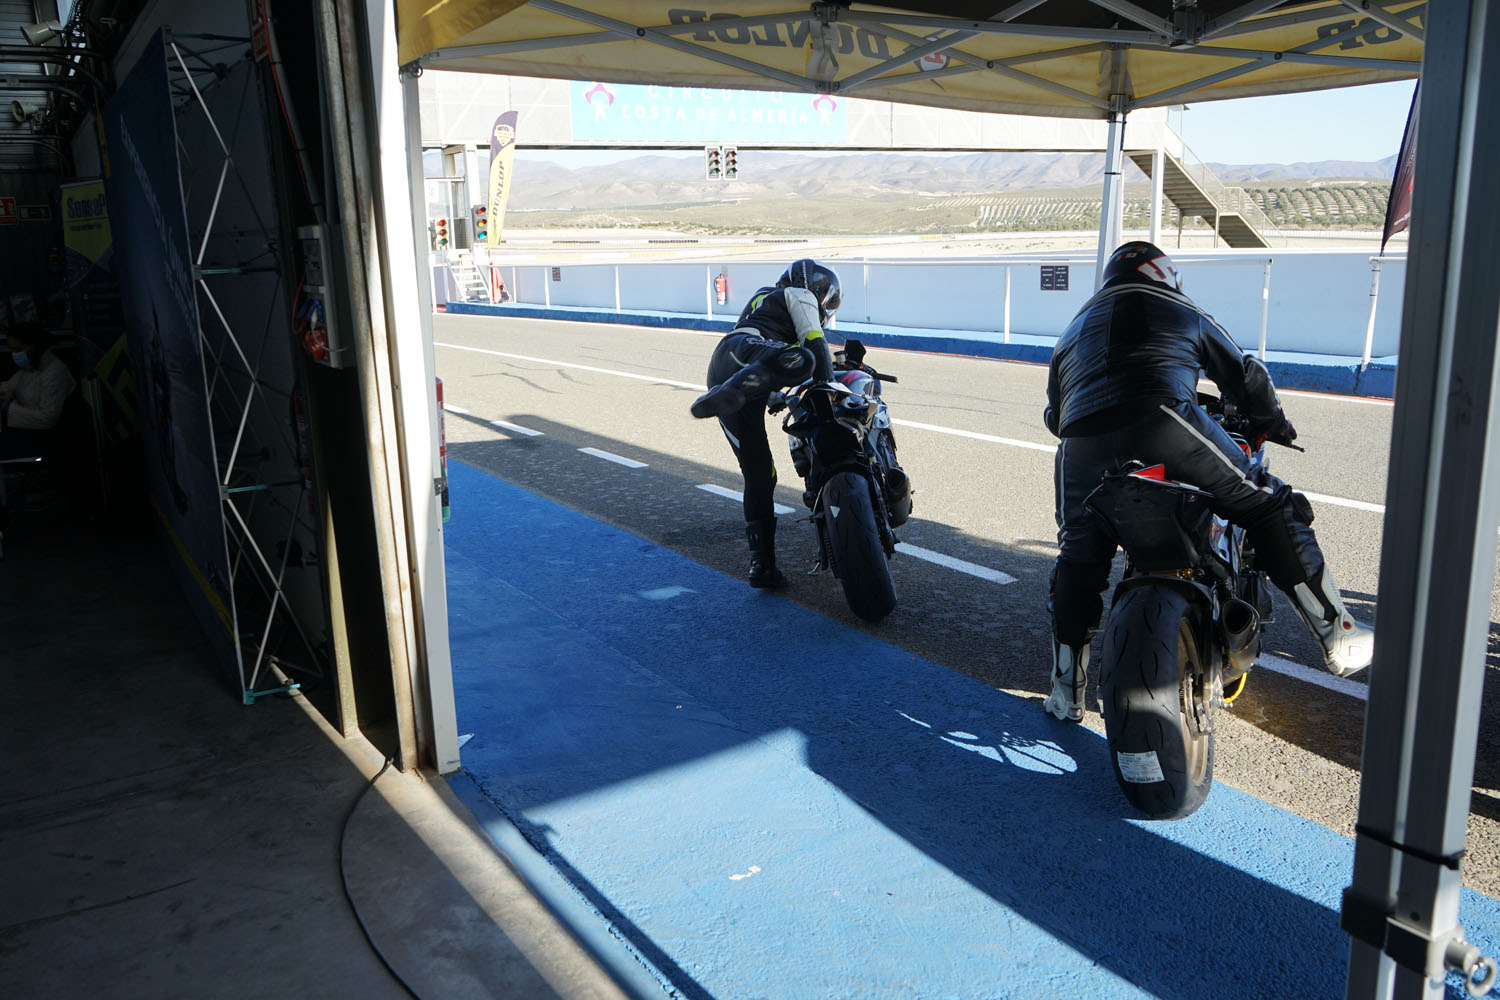 Clientes Alquiler de Motos - Circuito de Almeria 13-14 Noviembre 2021 - Motor Extremo